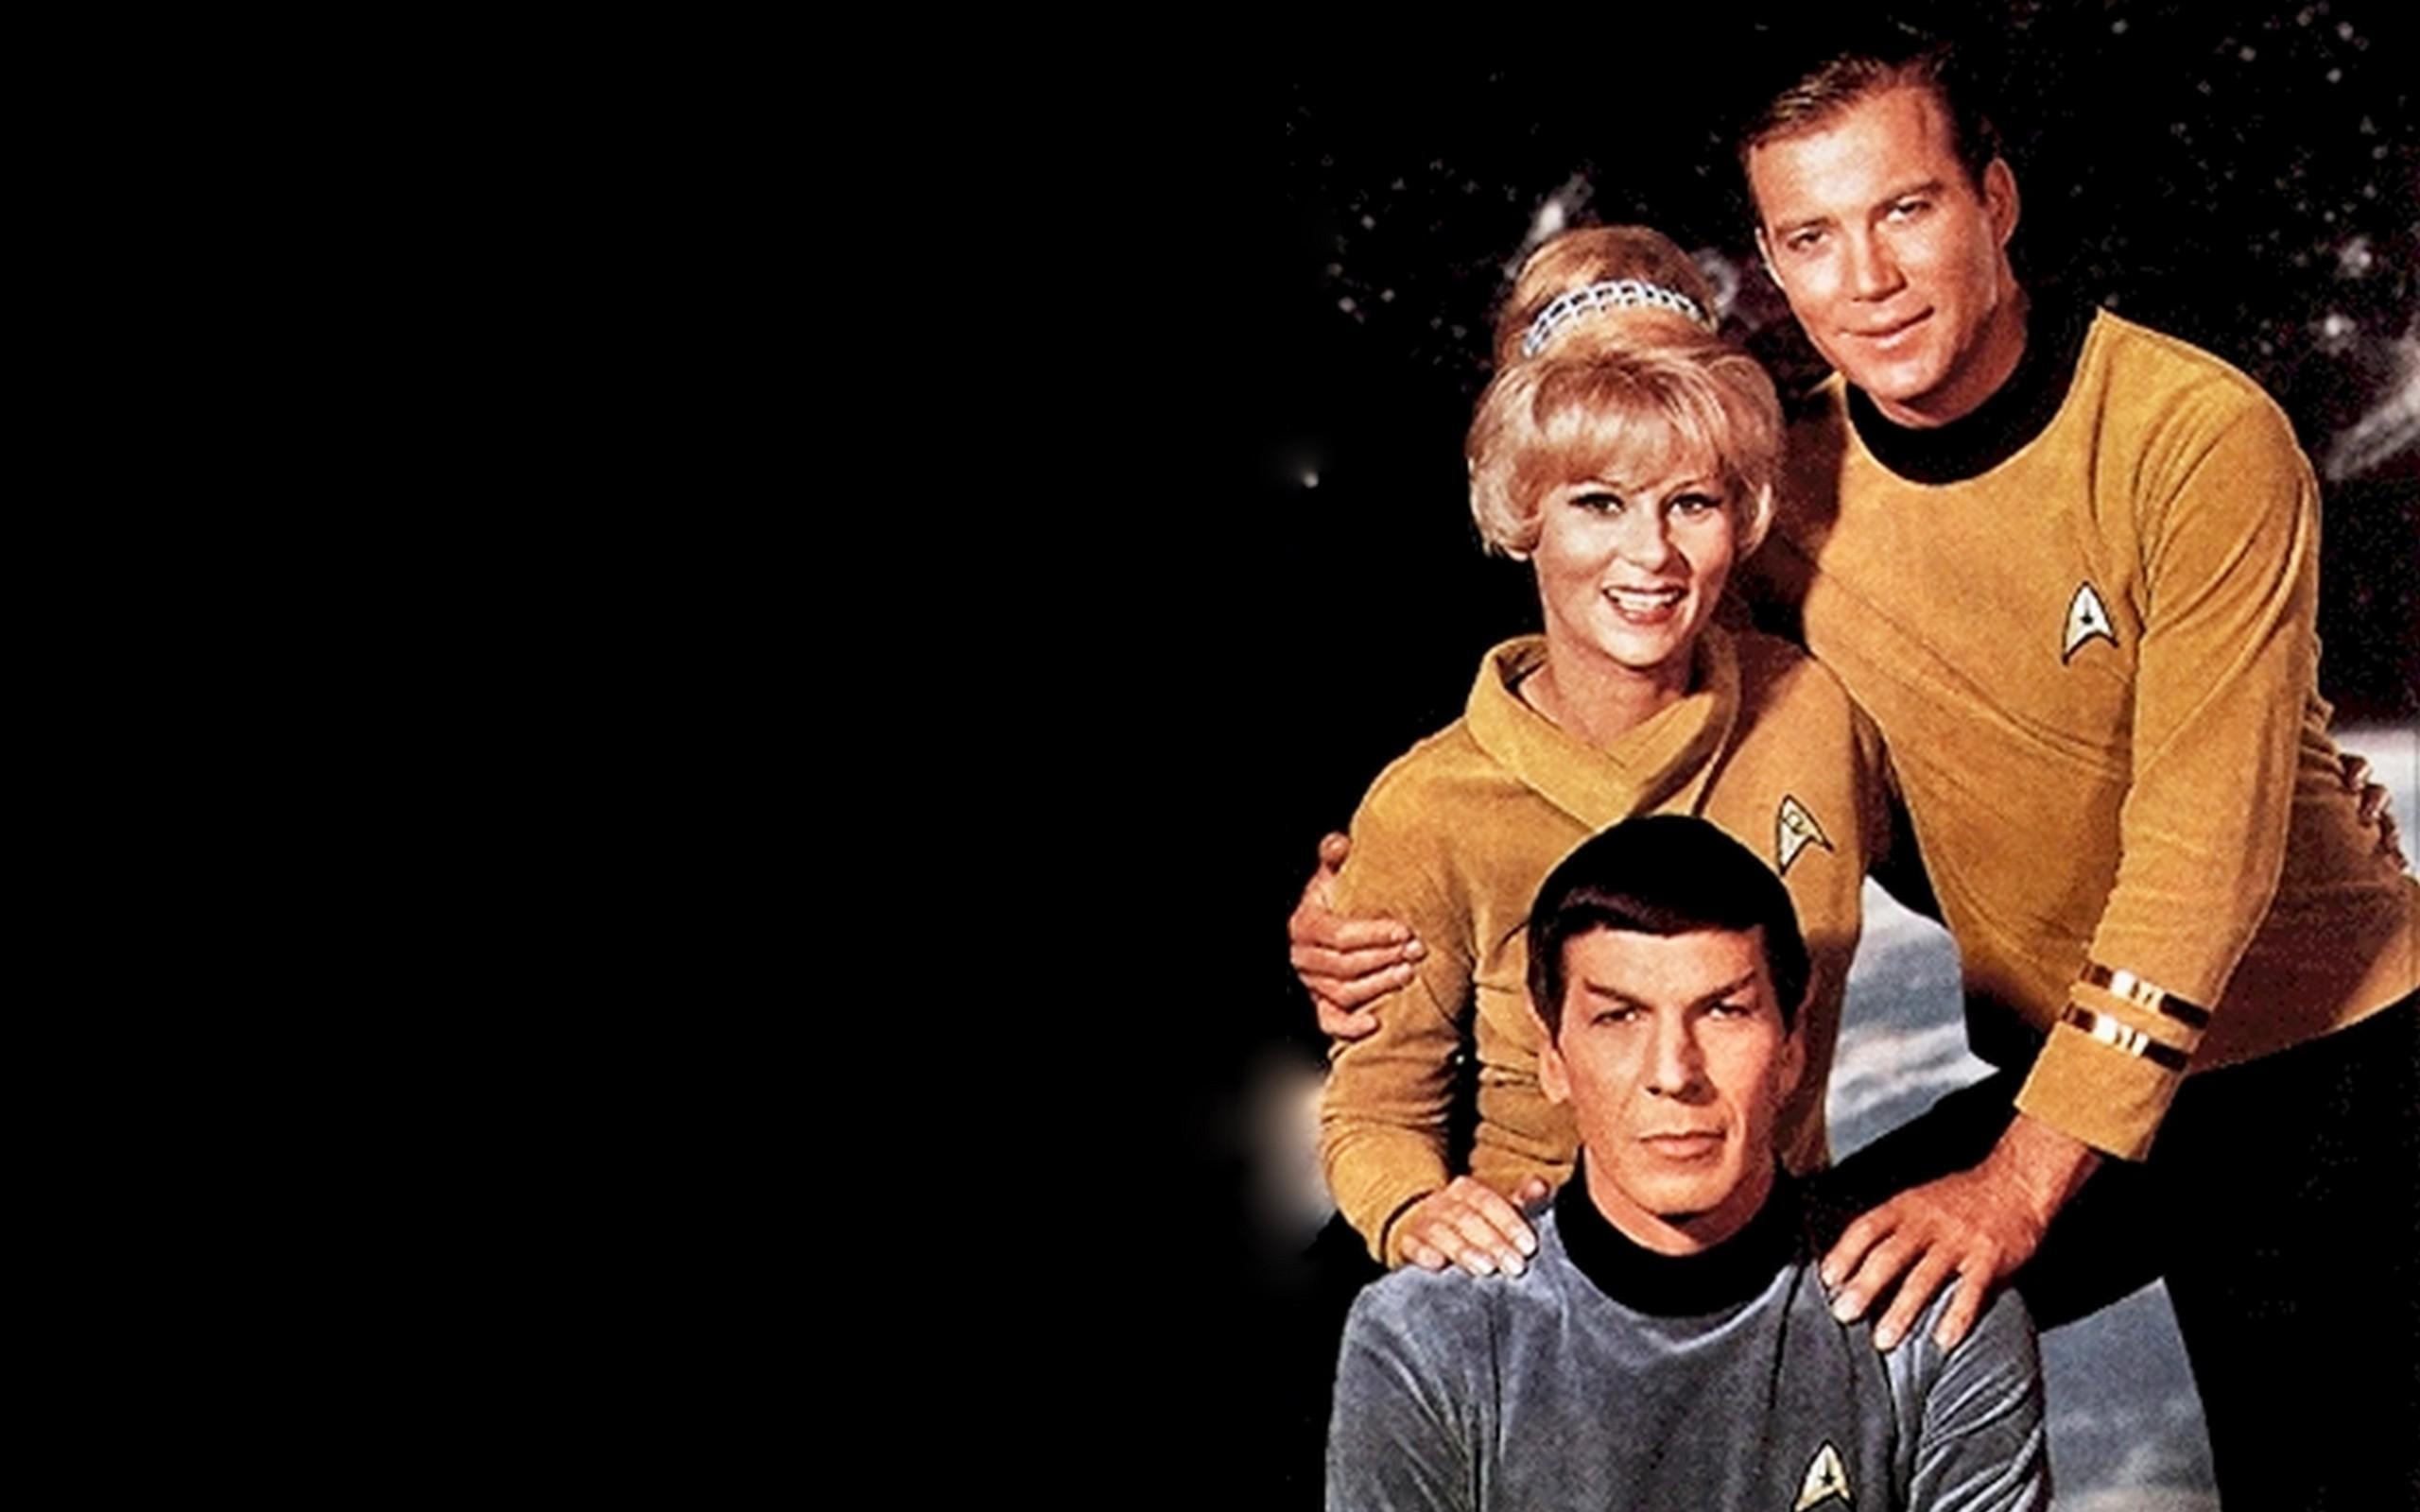 TV Show Star Trek: The Original Series wallpaper Desktop, Phone